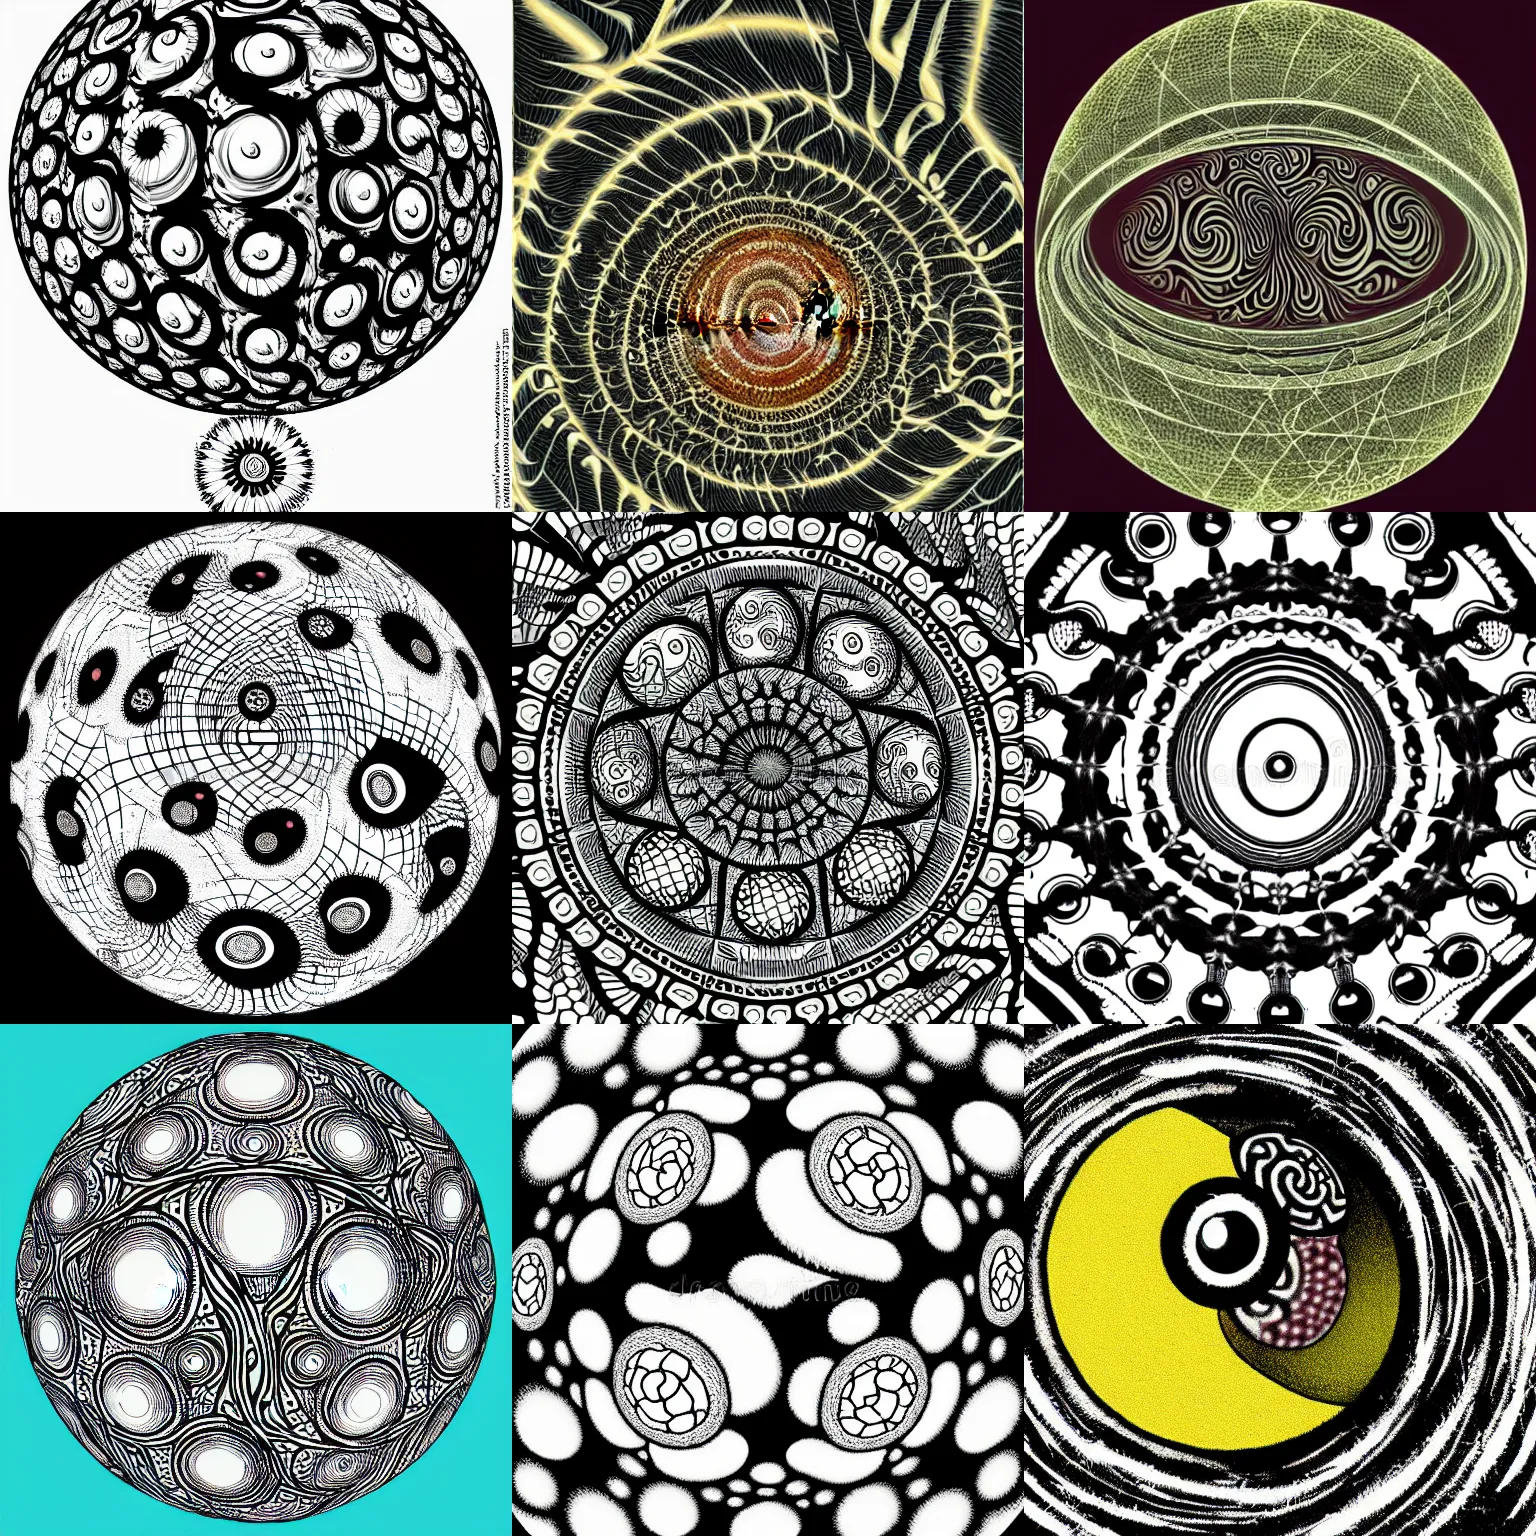 Prompt: fractal eyeball temari ball argus panoptes illustration by junji ito